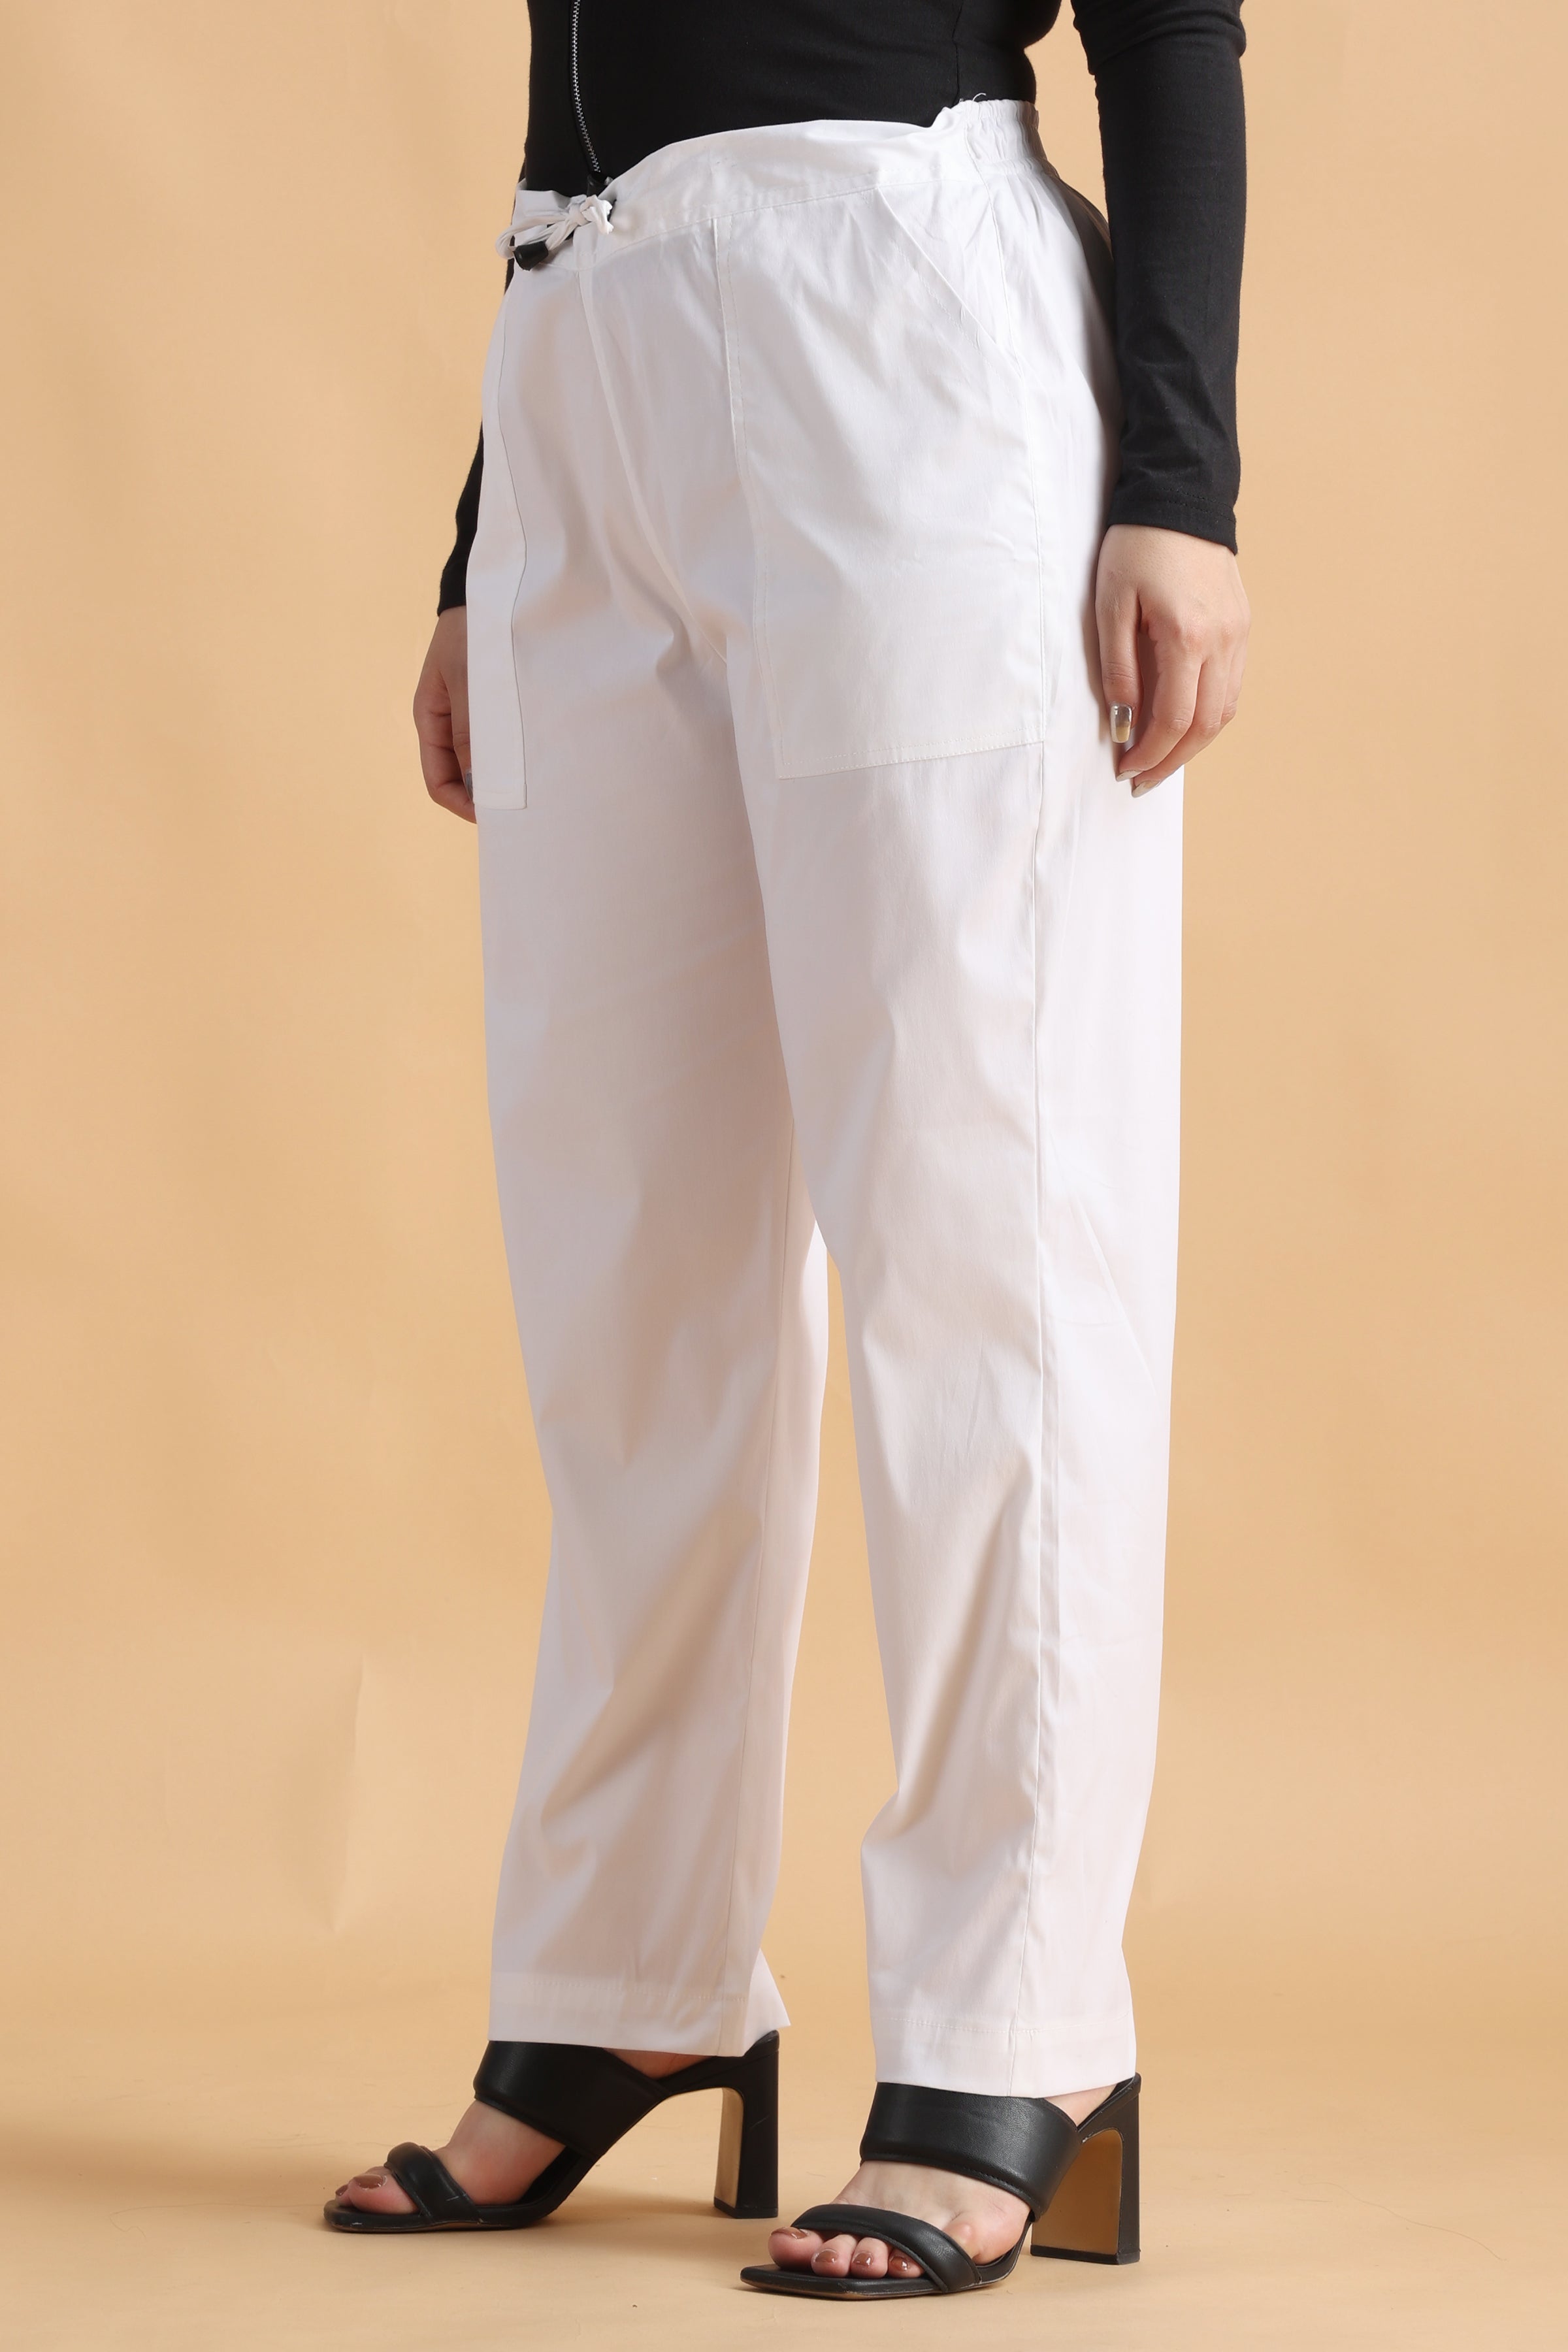 B.green Skinny Type Cotton Lycra Pants at Rs 170 in Alwar | ID: 23563151288